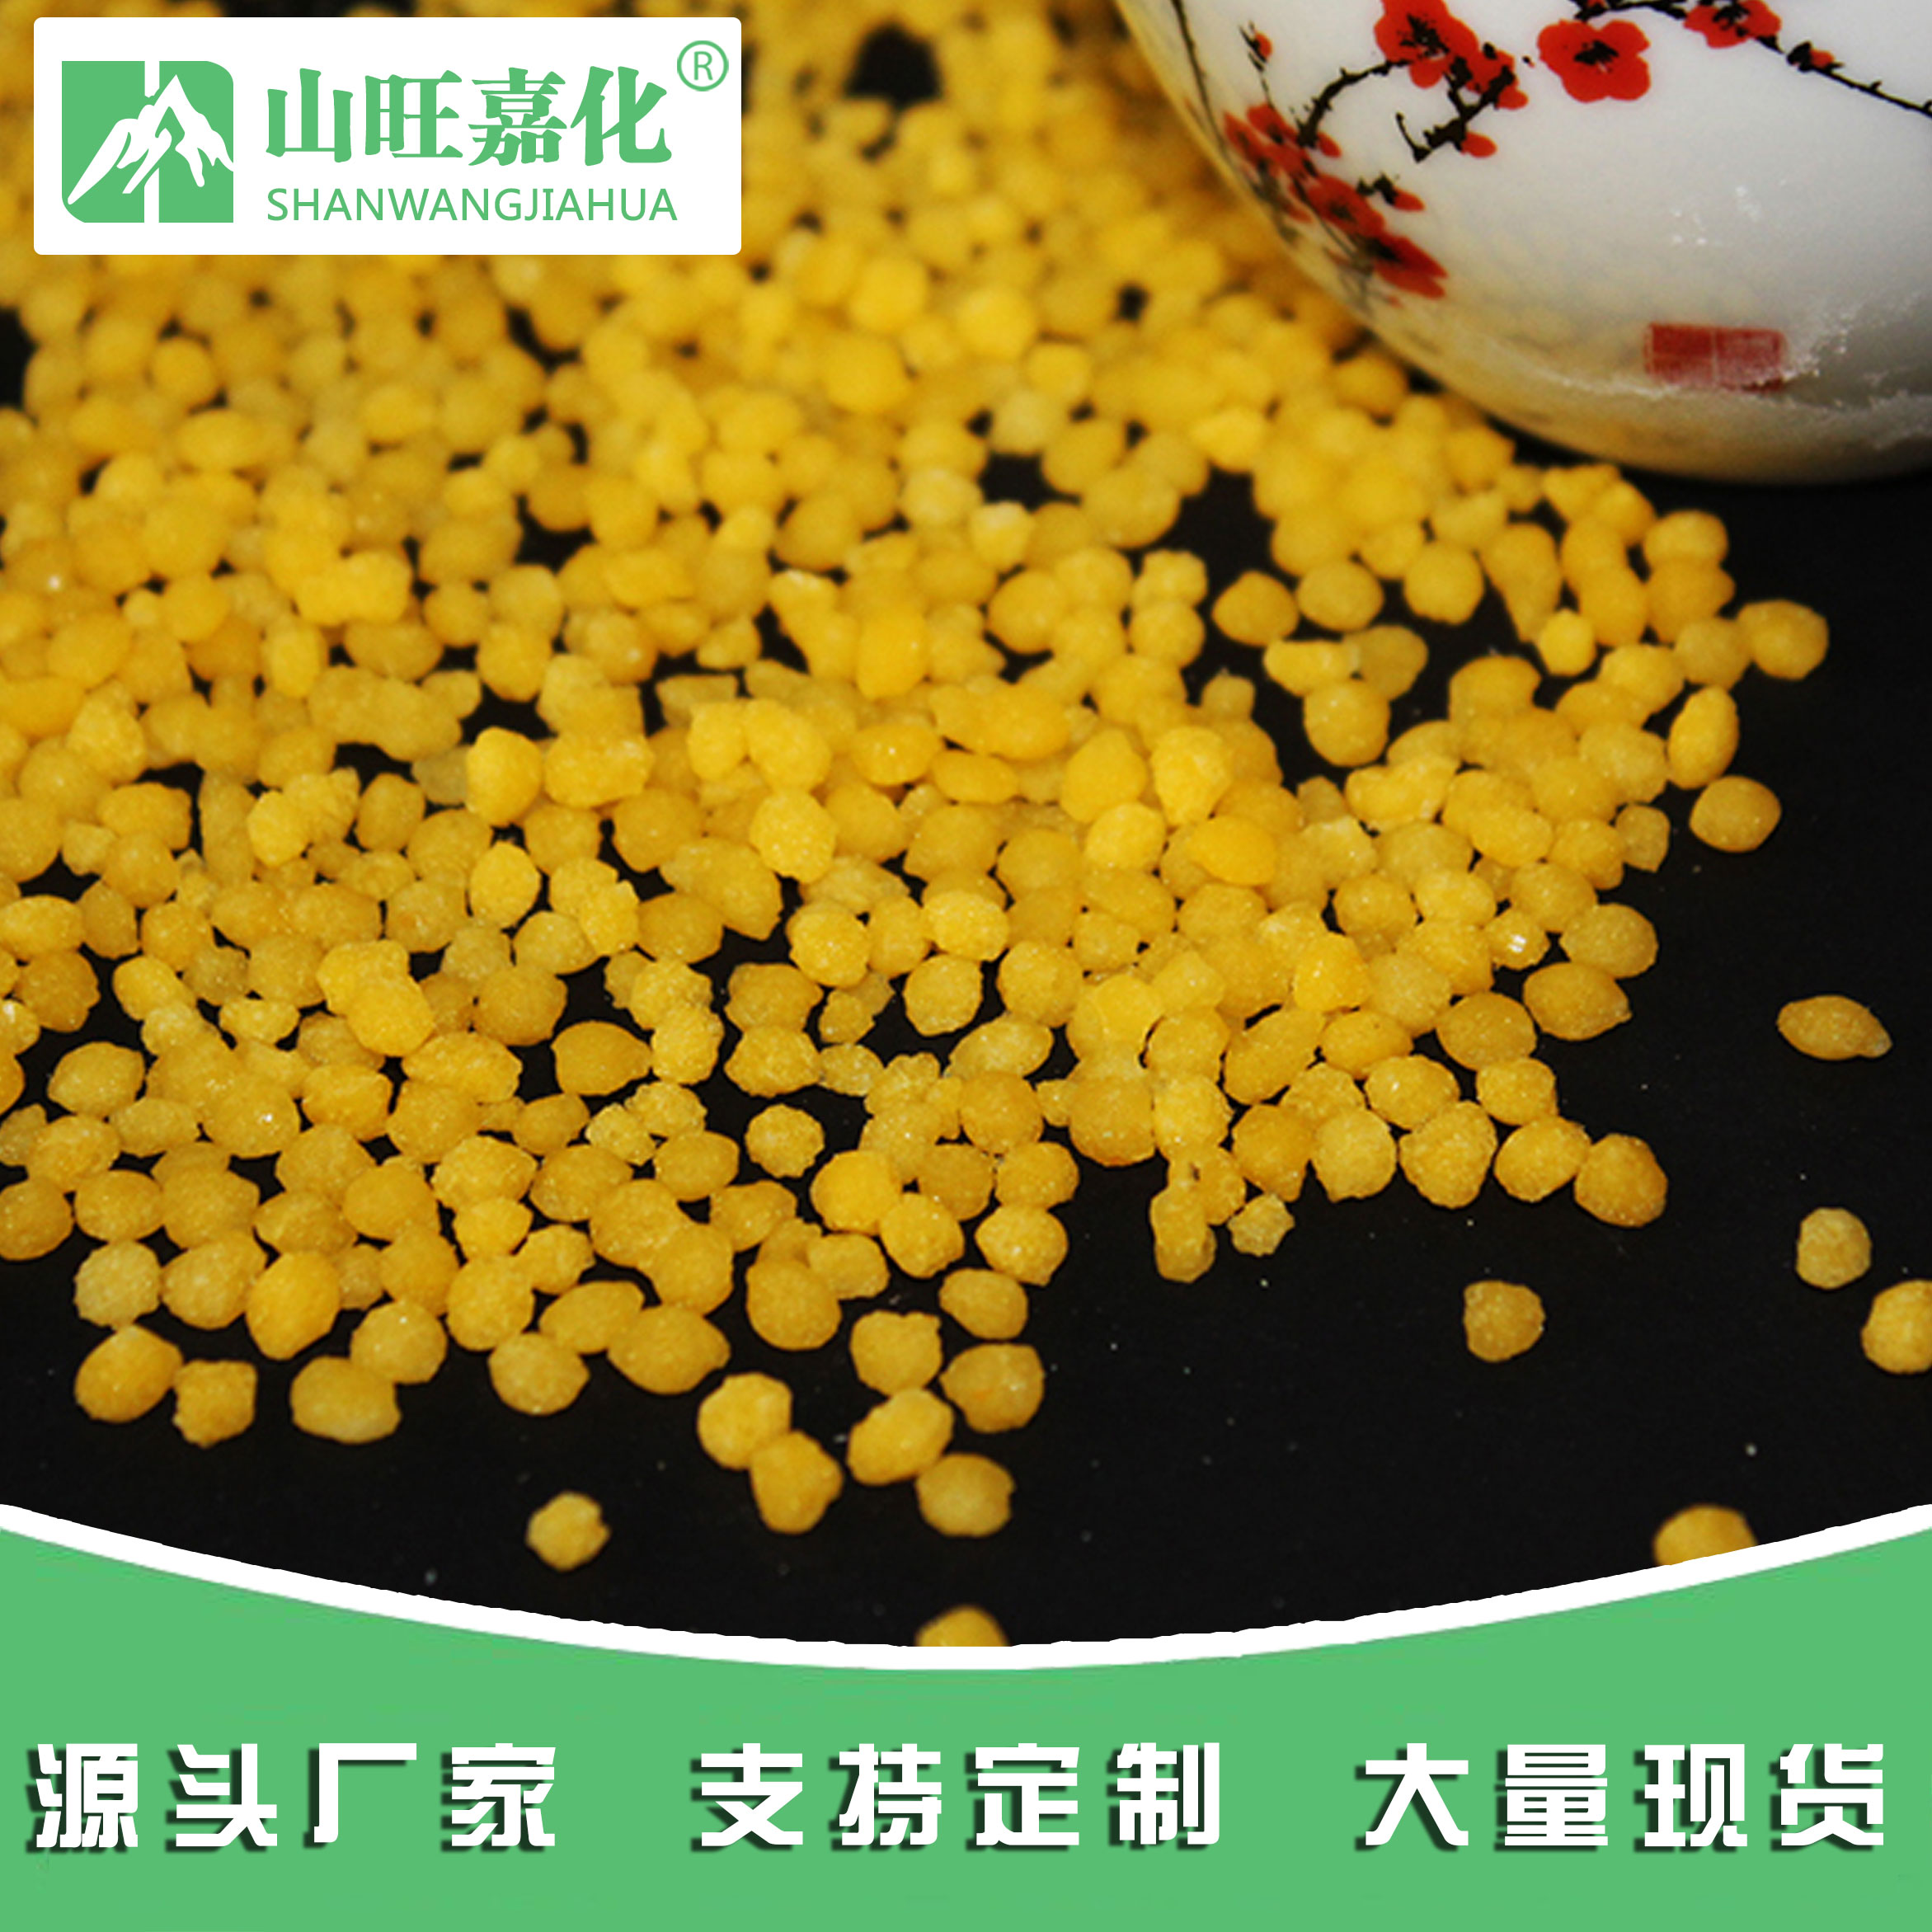 Yellow grain magnesium sulfate